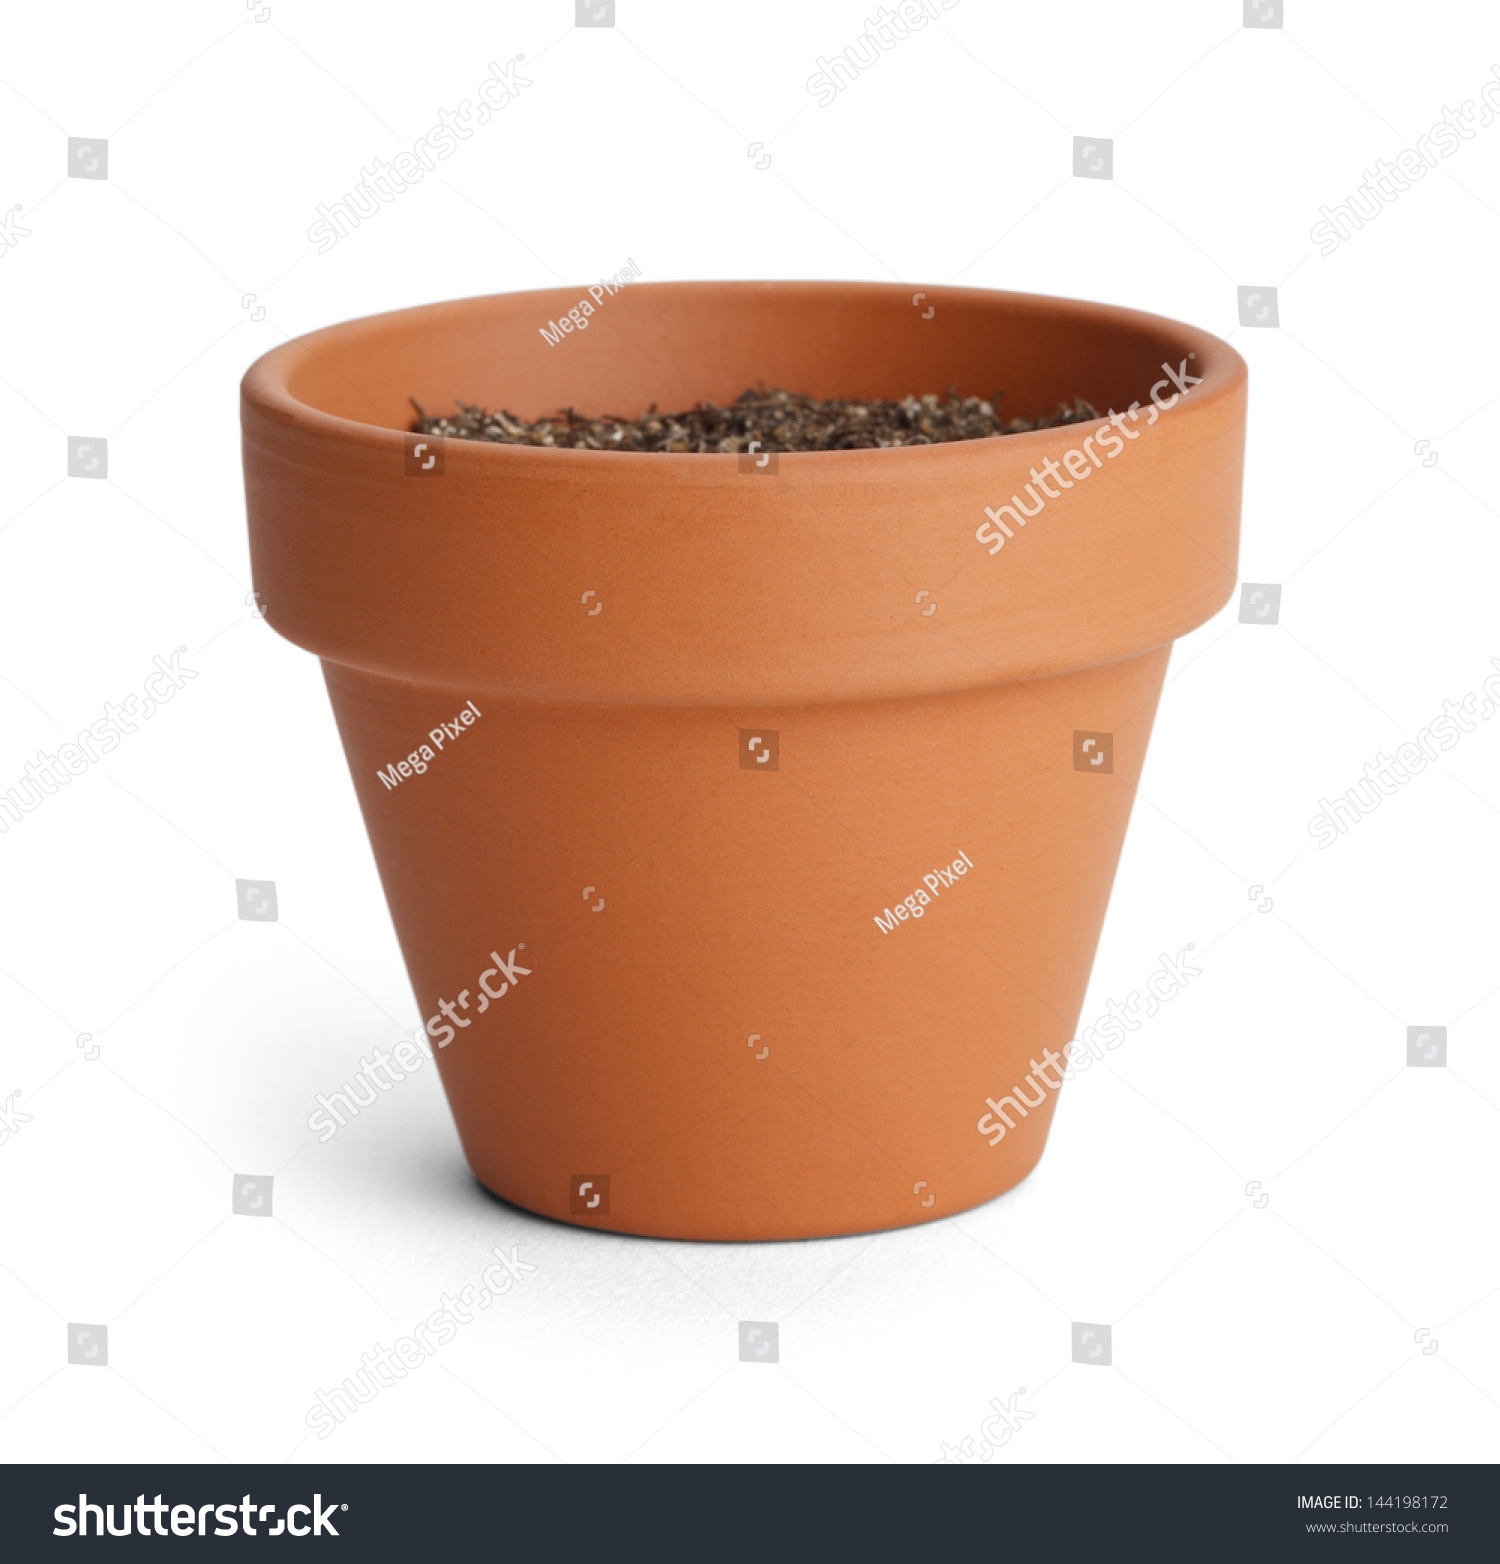 Orange Terracotta Pot with Soil Isolated on White Background. #144198172